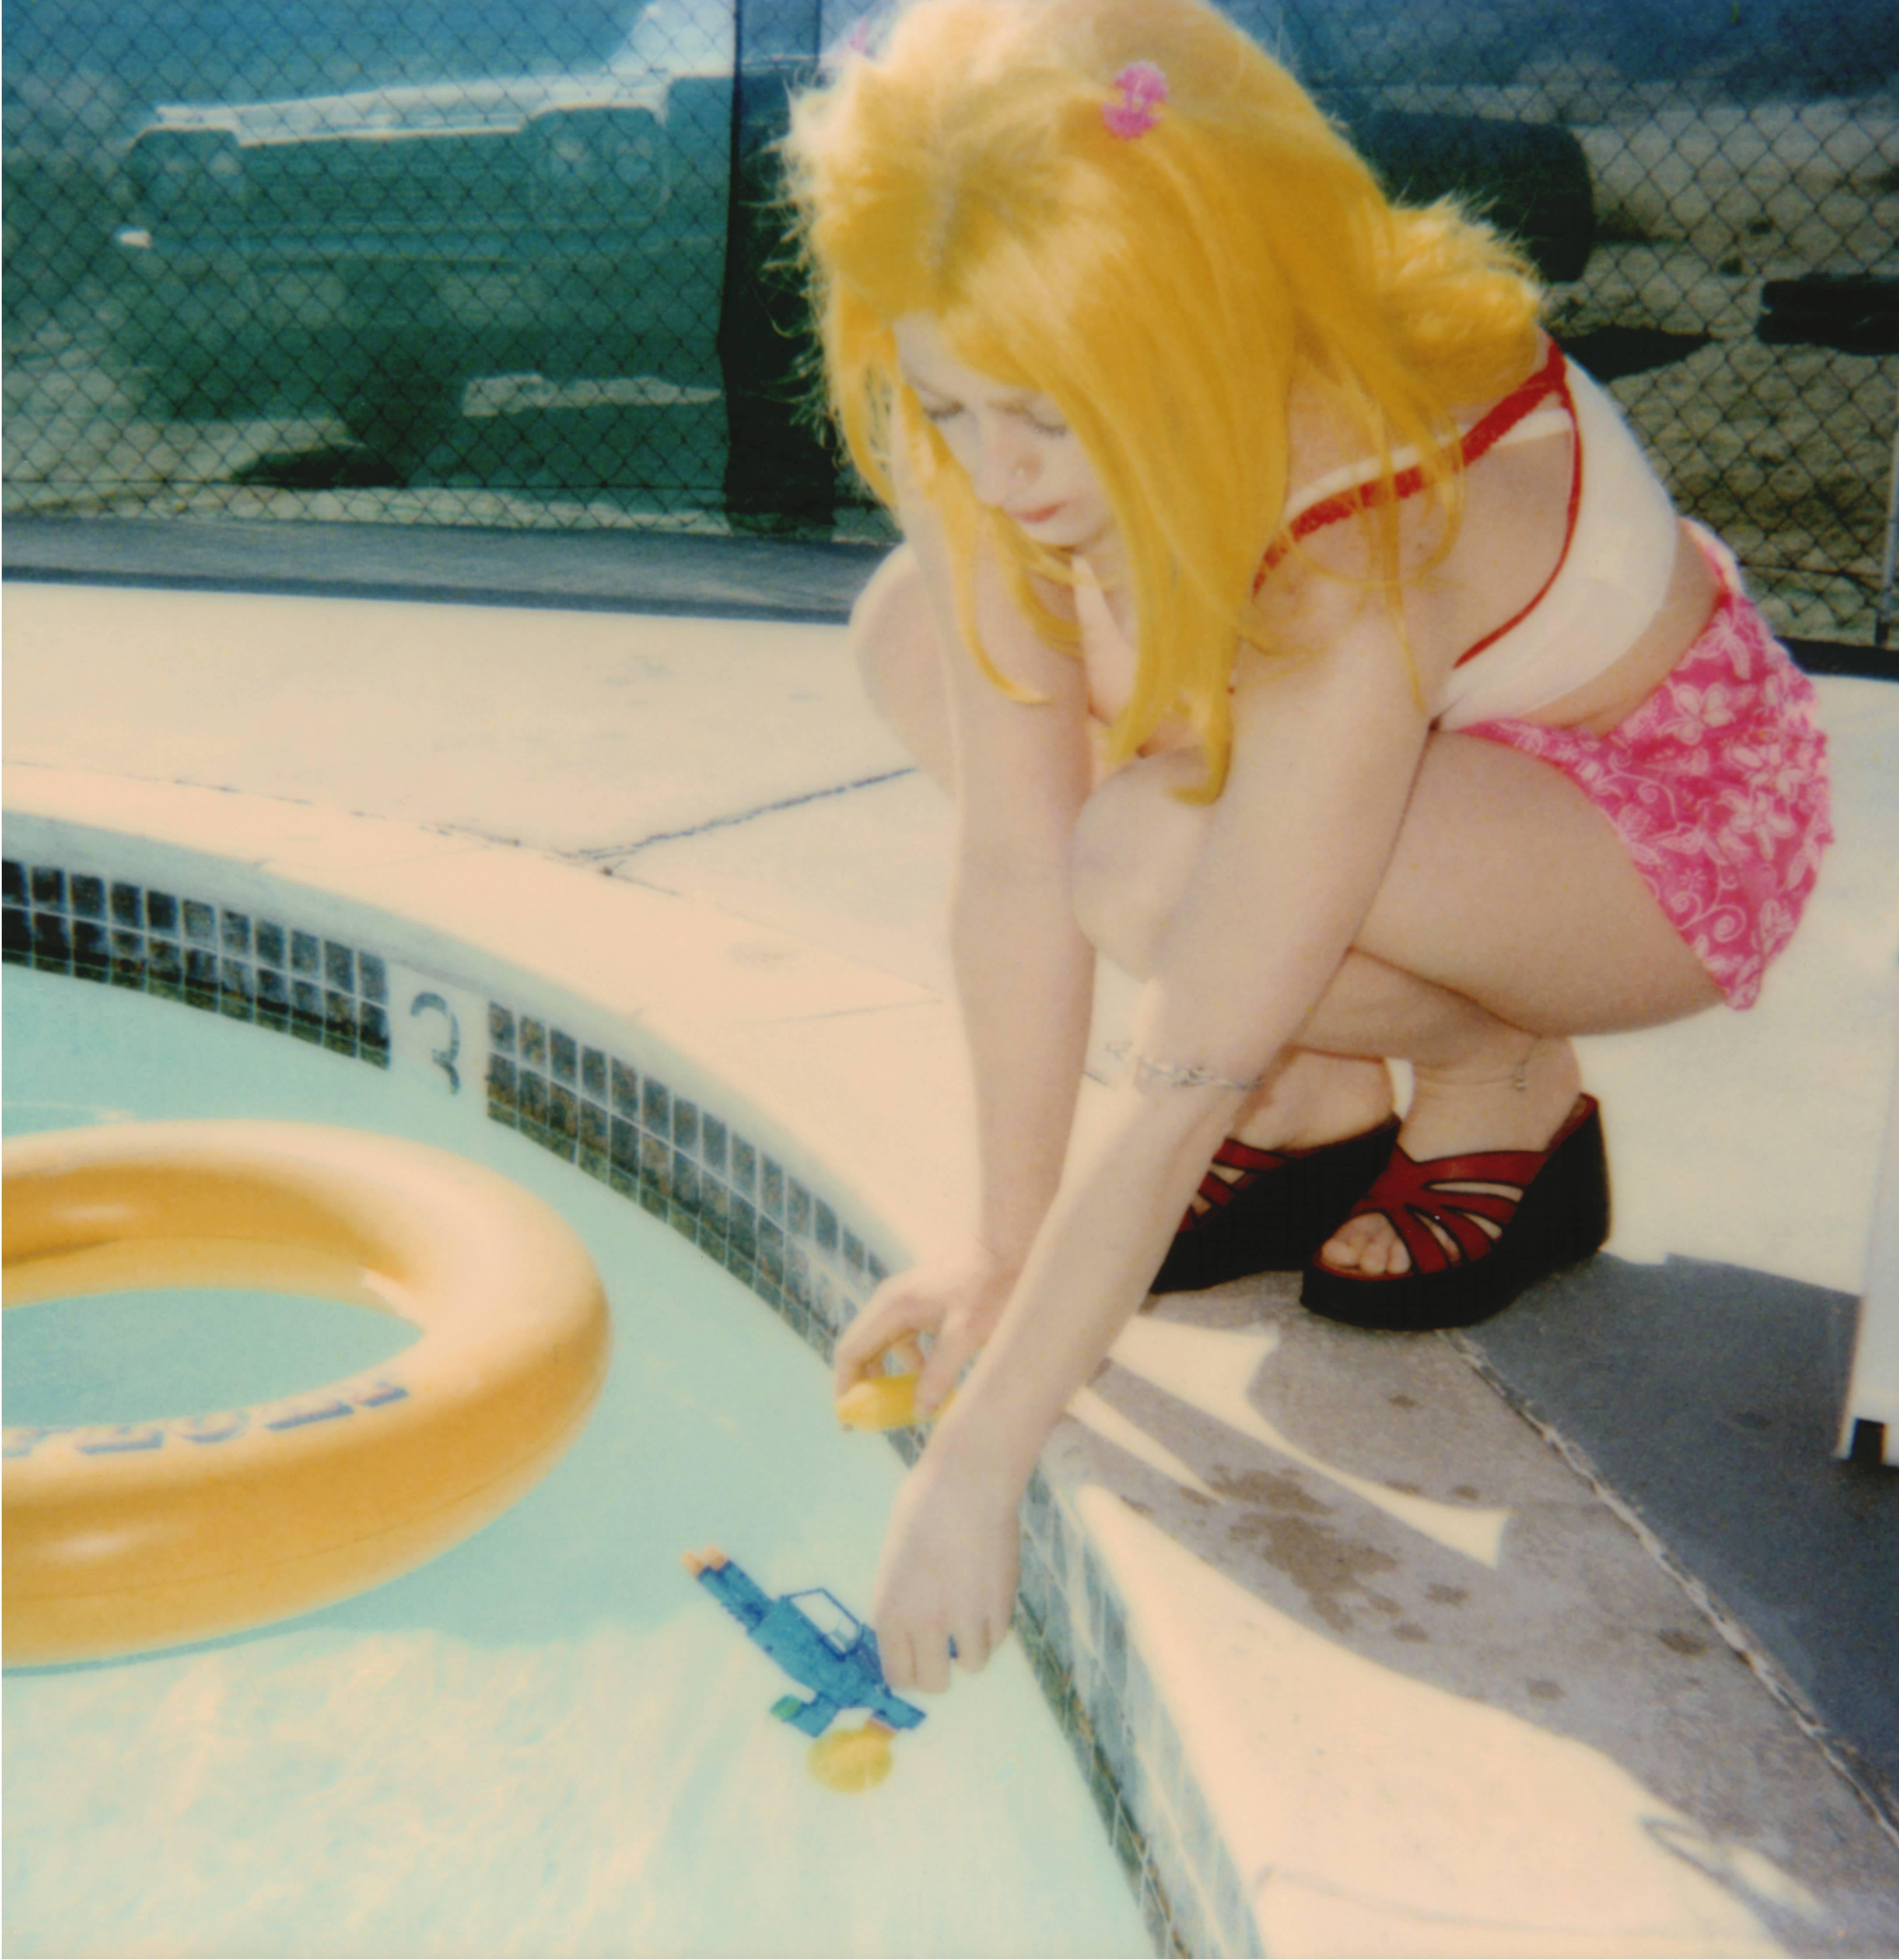 Stefanie Schneider Color Photograph - Max by the Pool - 29 Palms, California, Polaroid